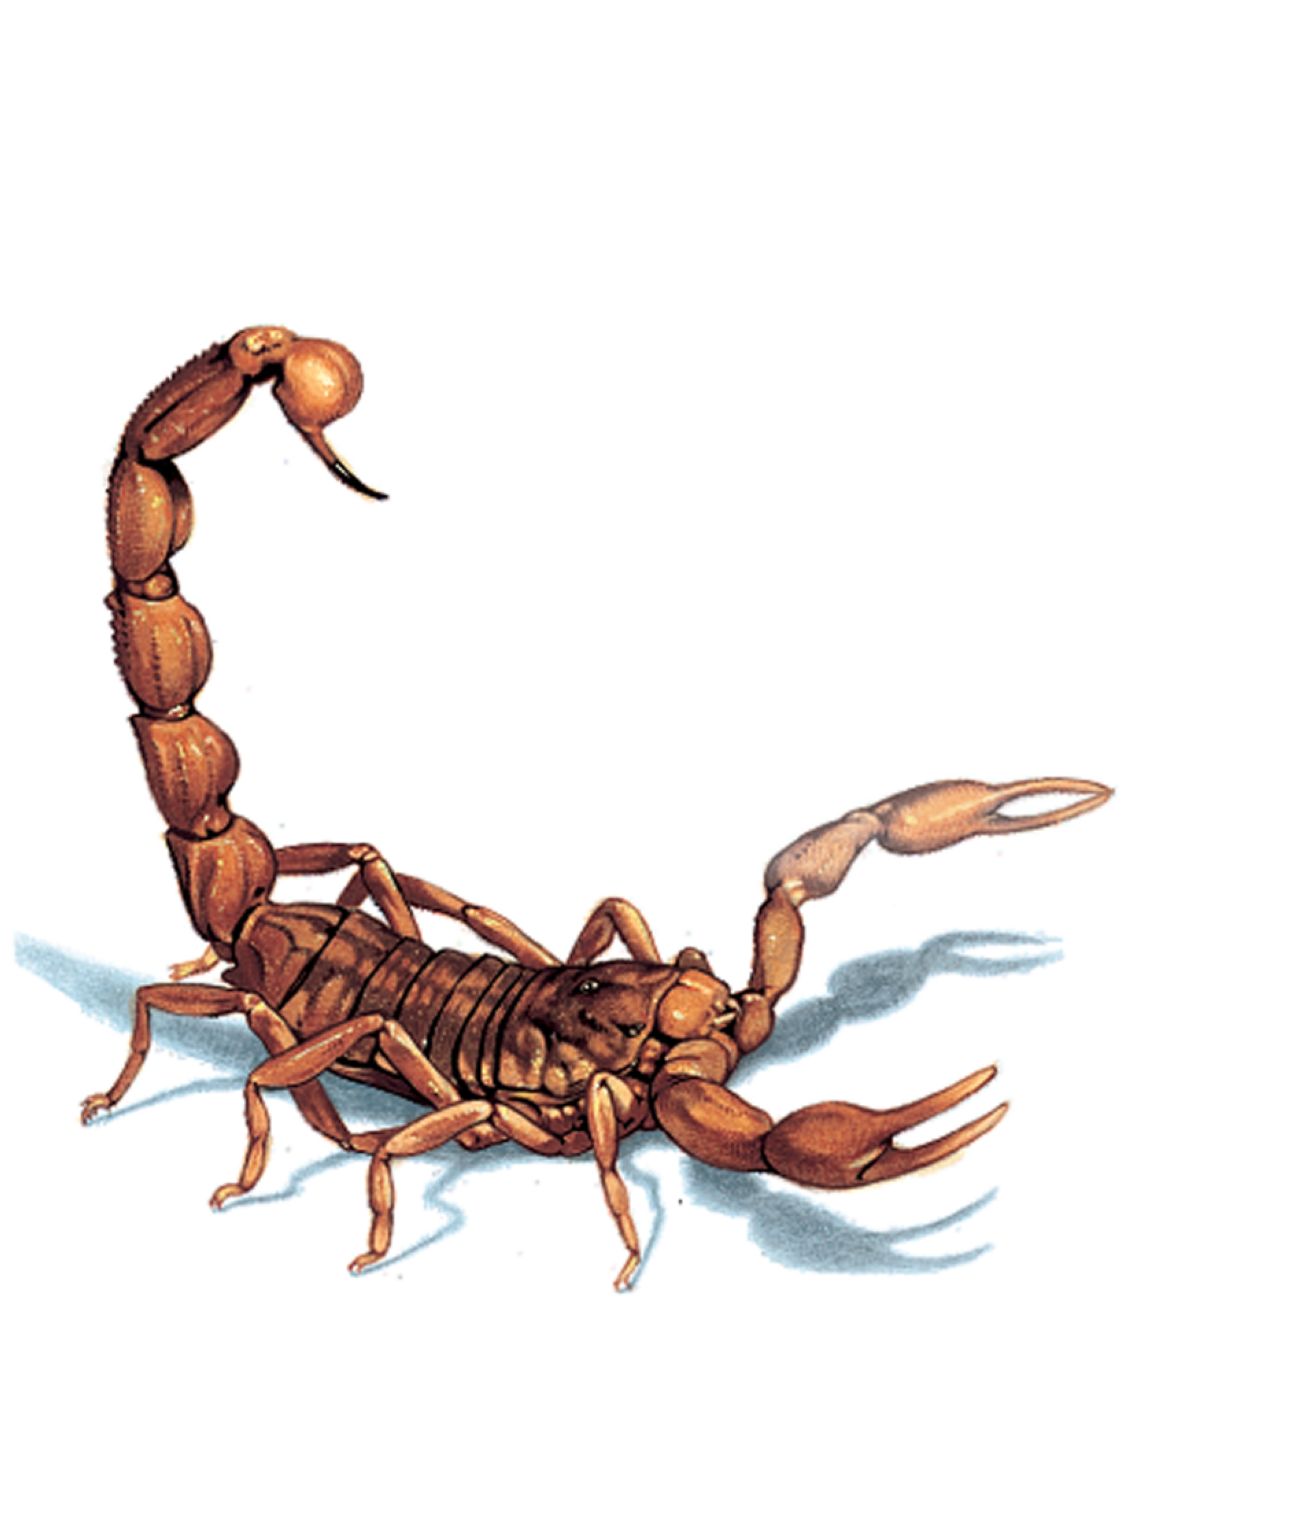 un scorpion